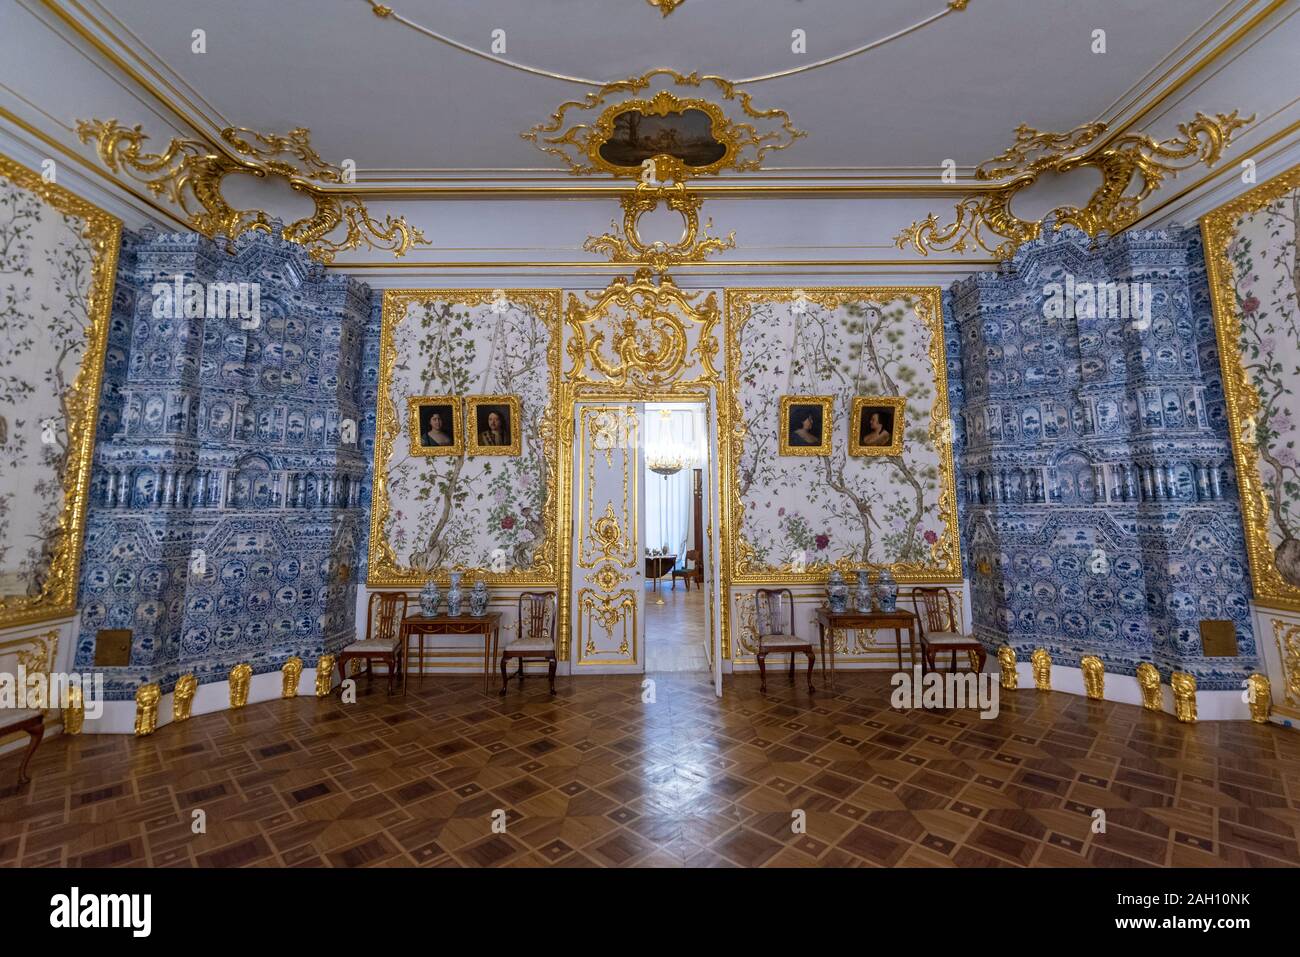 Tsarskoye Selo (Pushkin), Saint Petersburg, Russia - Baroque golden interior  of The Catherine Palace, located in the town of Tsarskoe selo Stock Photo -  Alamy